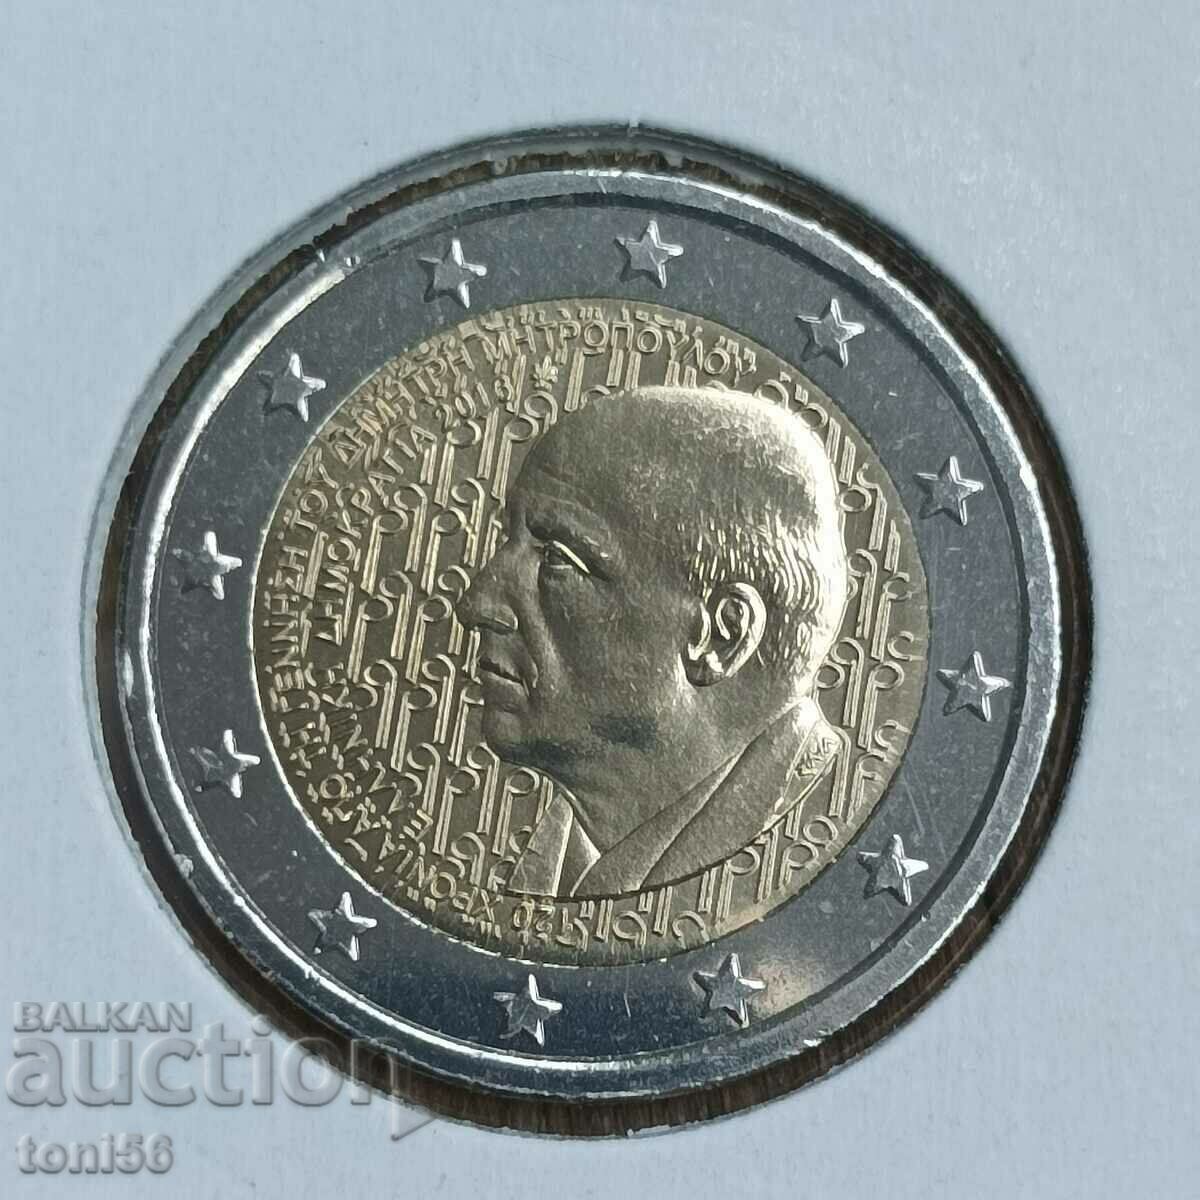 Гърция 2 евро 2016 - Димитри Митропулос